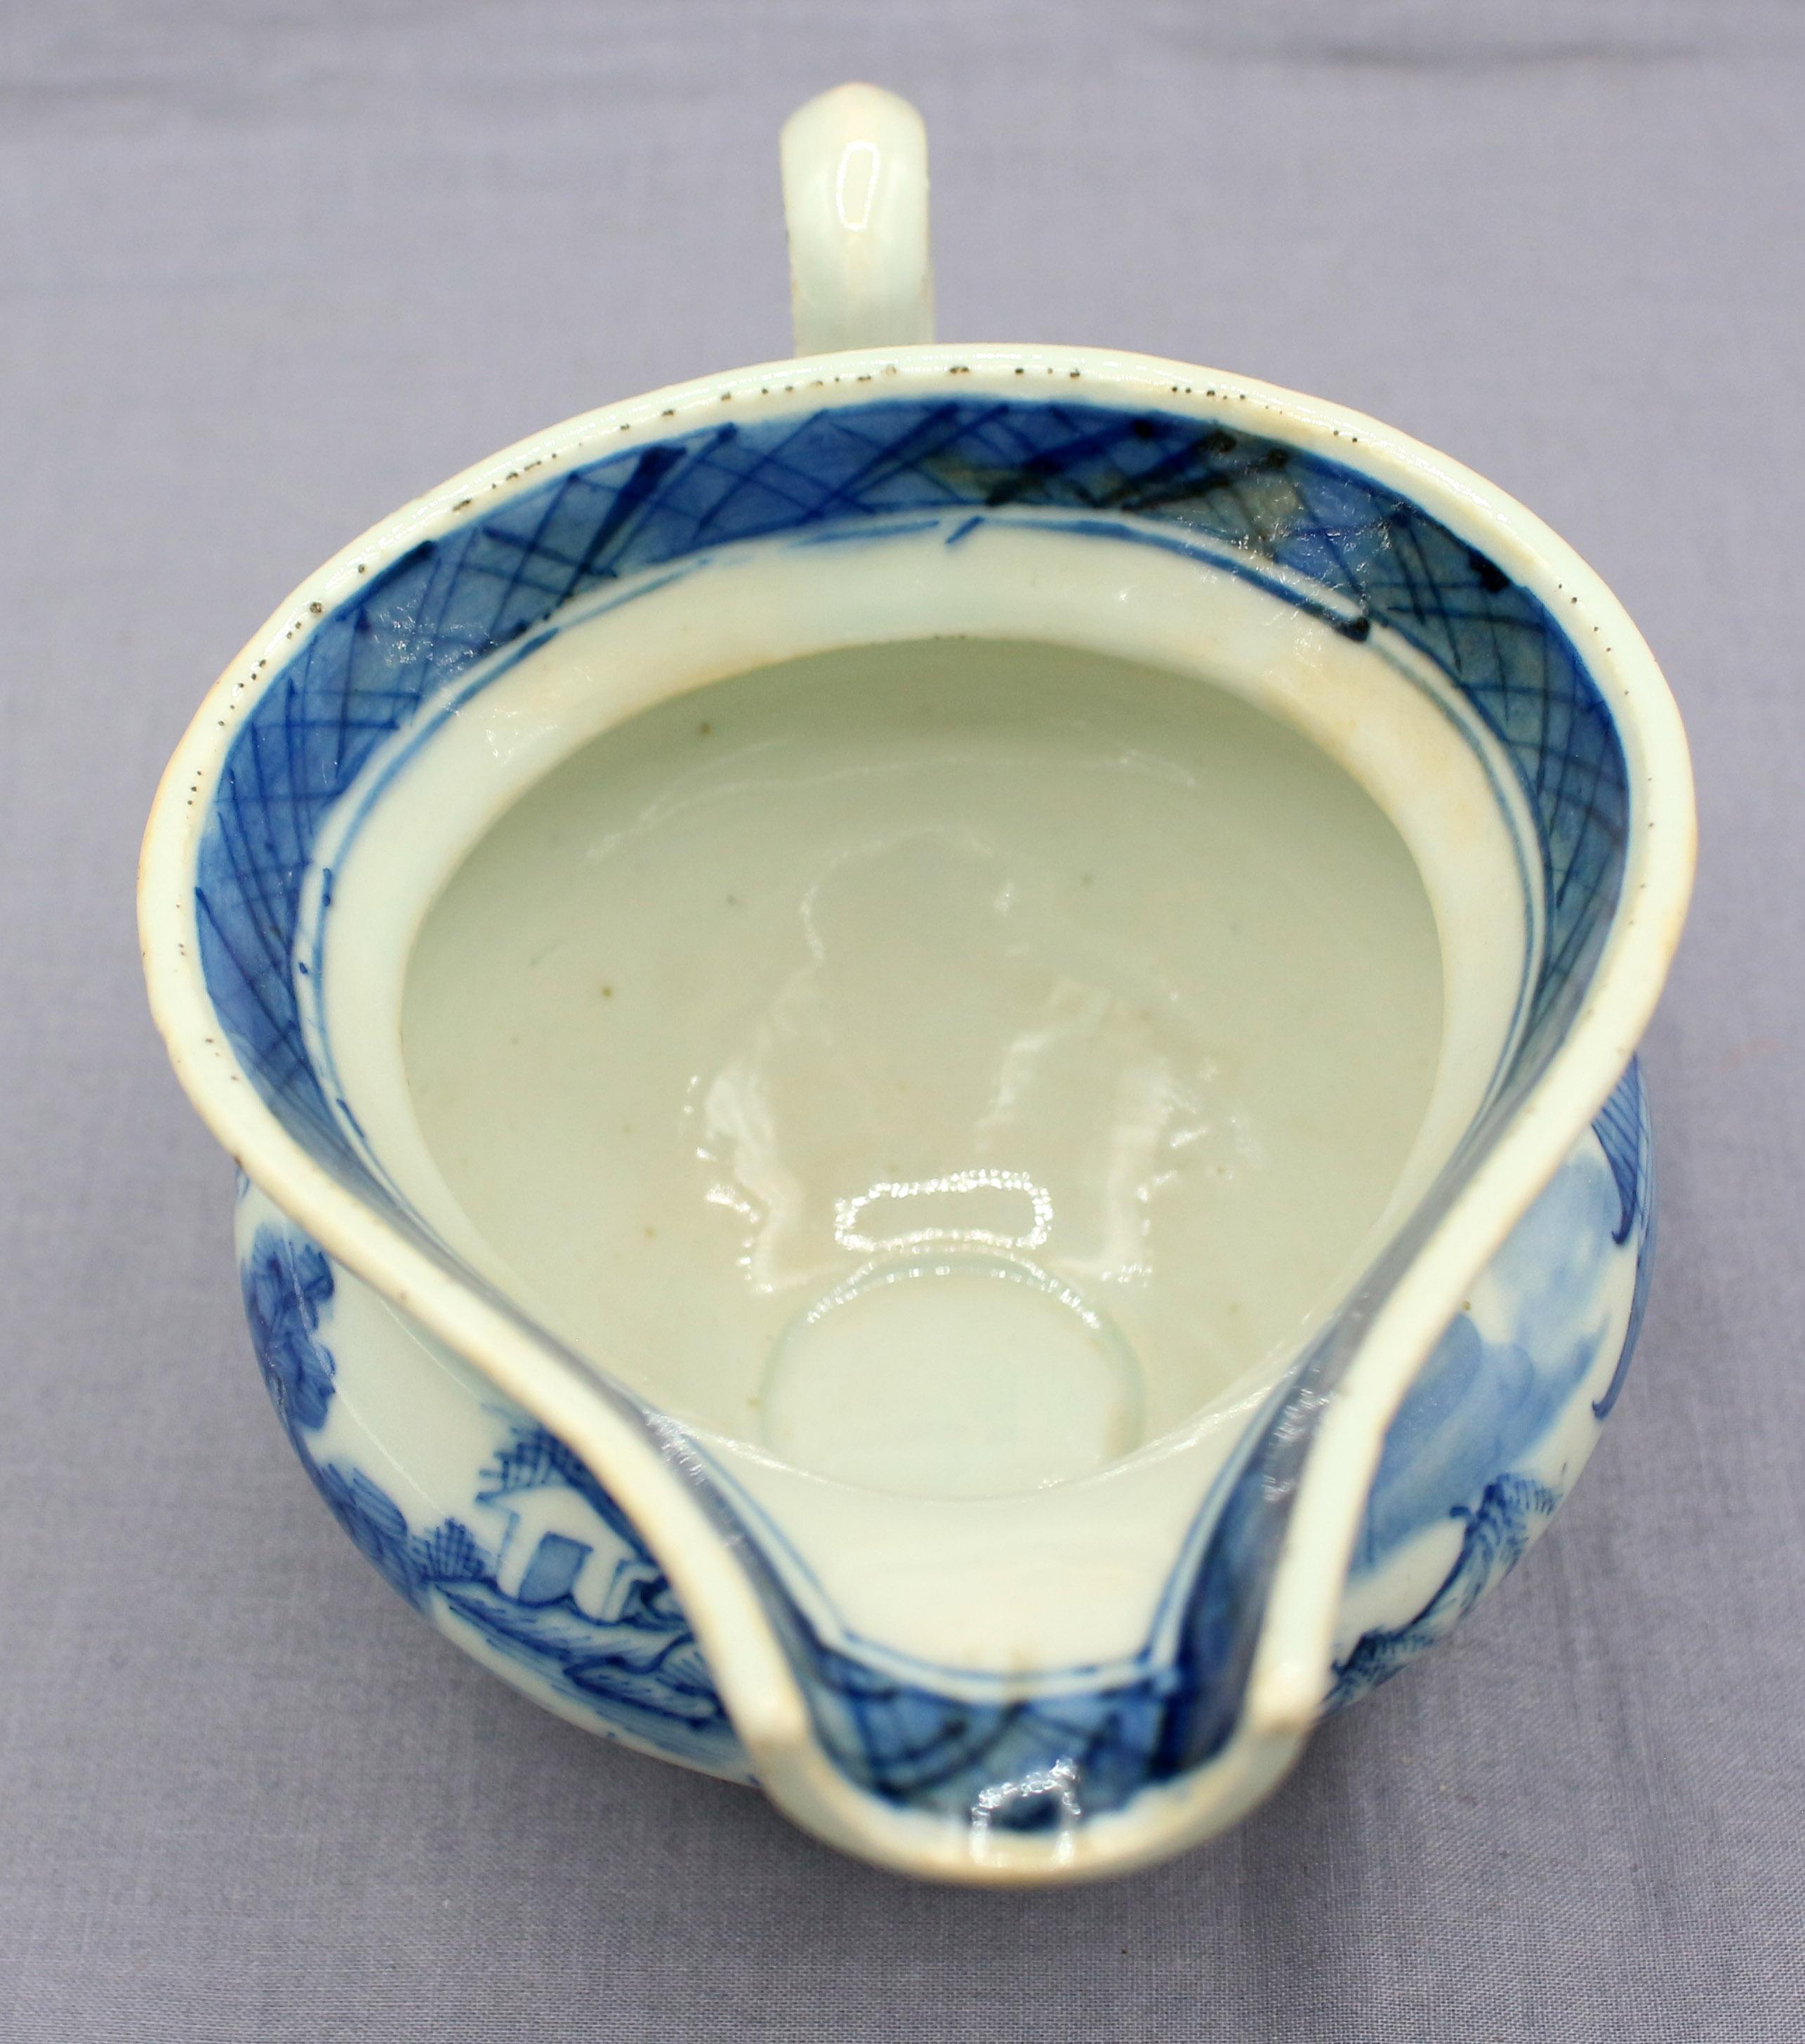 Circa 1830 Blue Canton gravy boat, Chinese export porcelain. Helmet form; loop handle. Light blue color. Interesting glaze & kiln flaws.
7